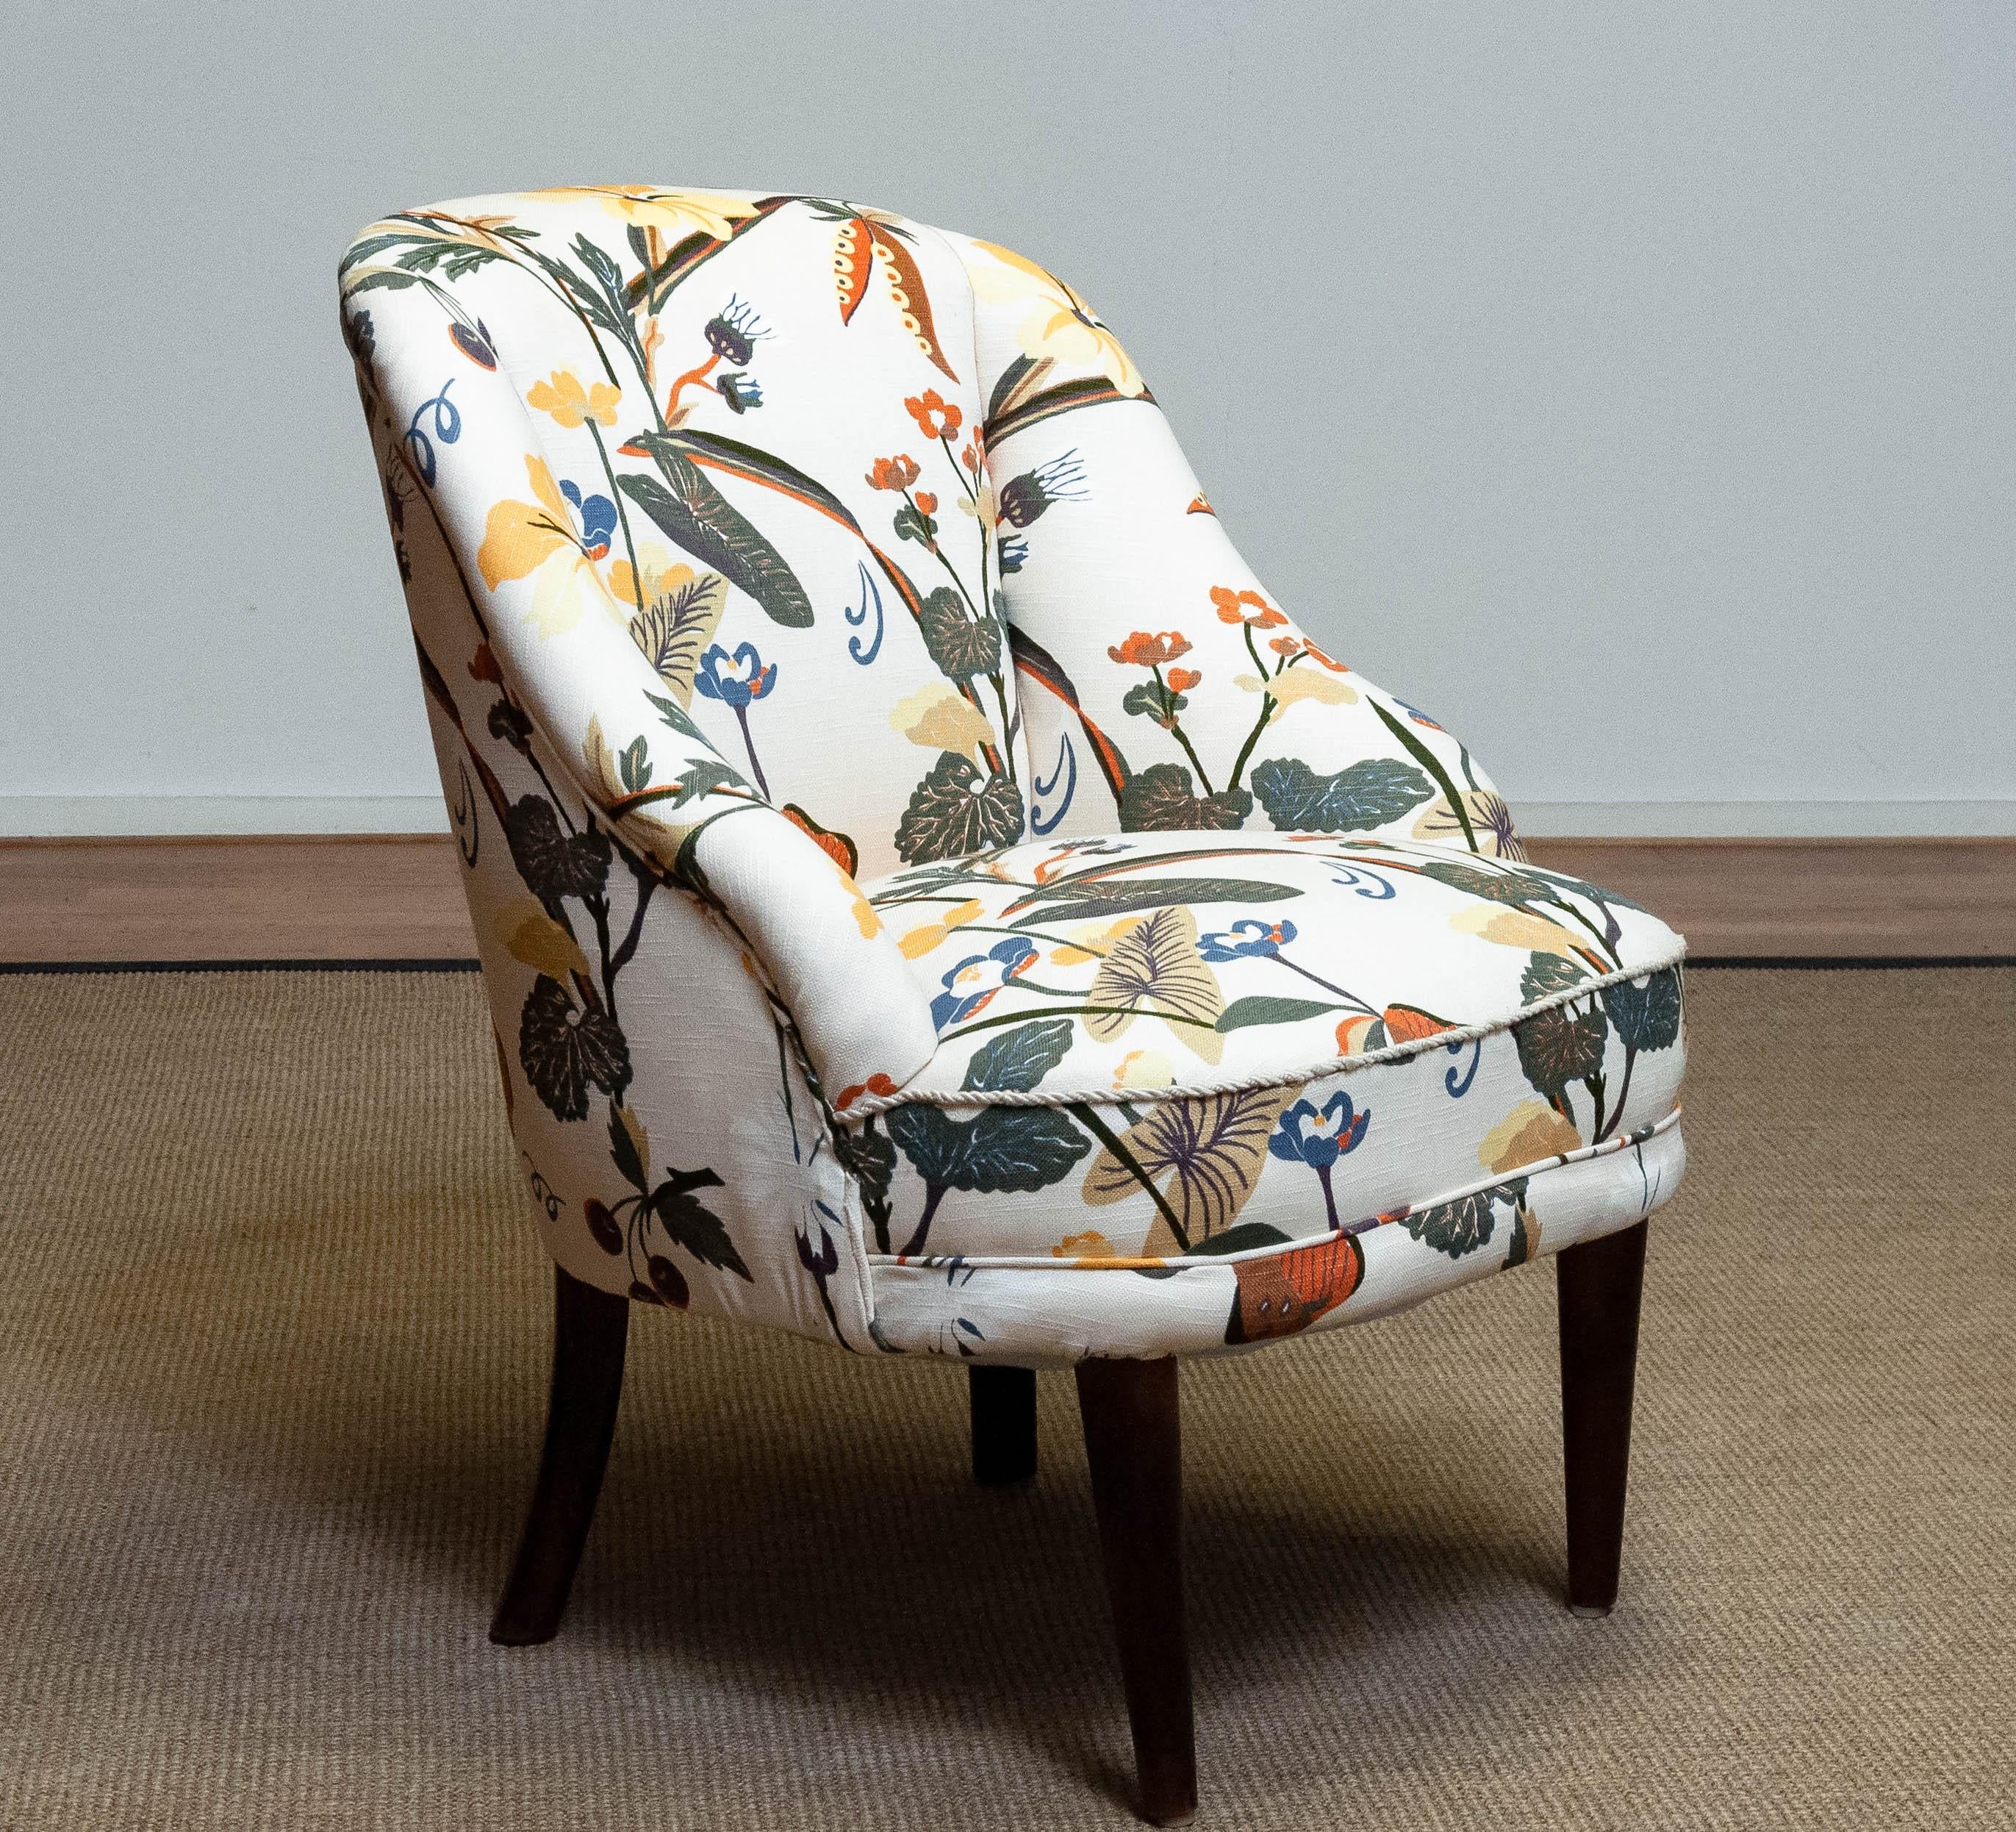 '40s Floral Printed Linen, J. Frank Style, New Upholstered Danish Slipper Chair For Sale 4